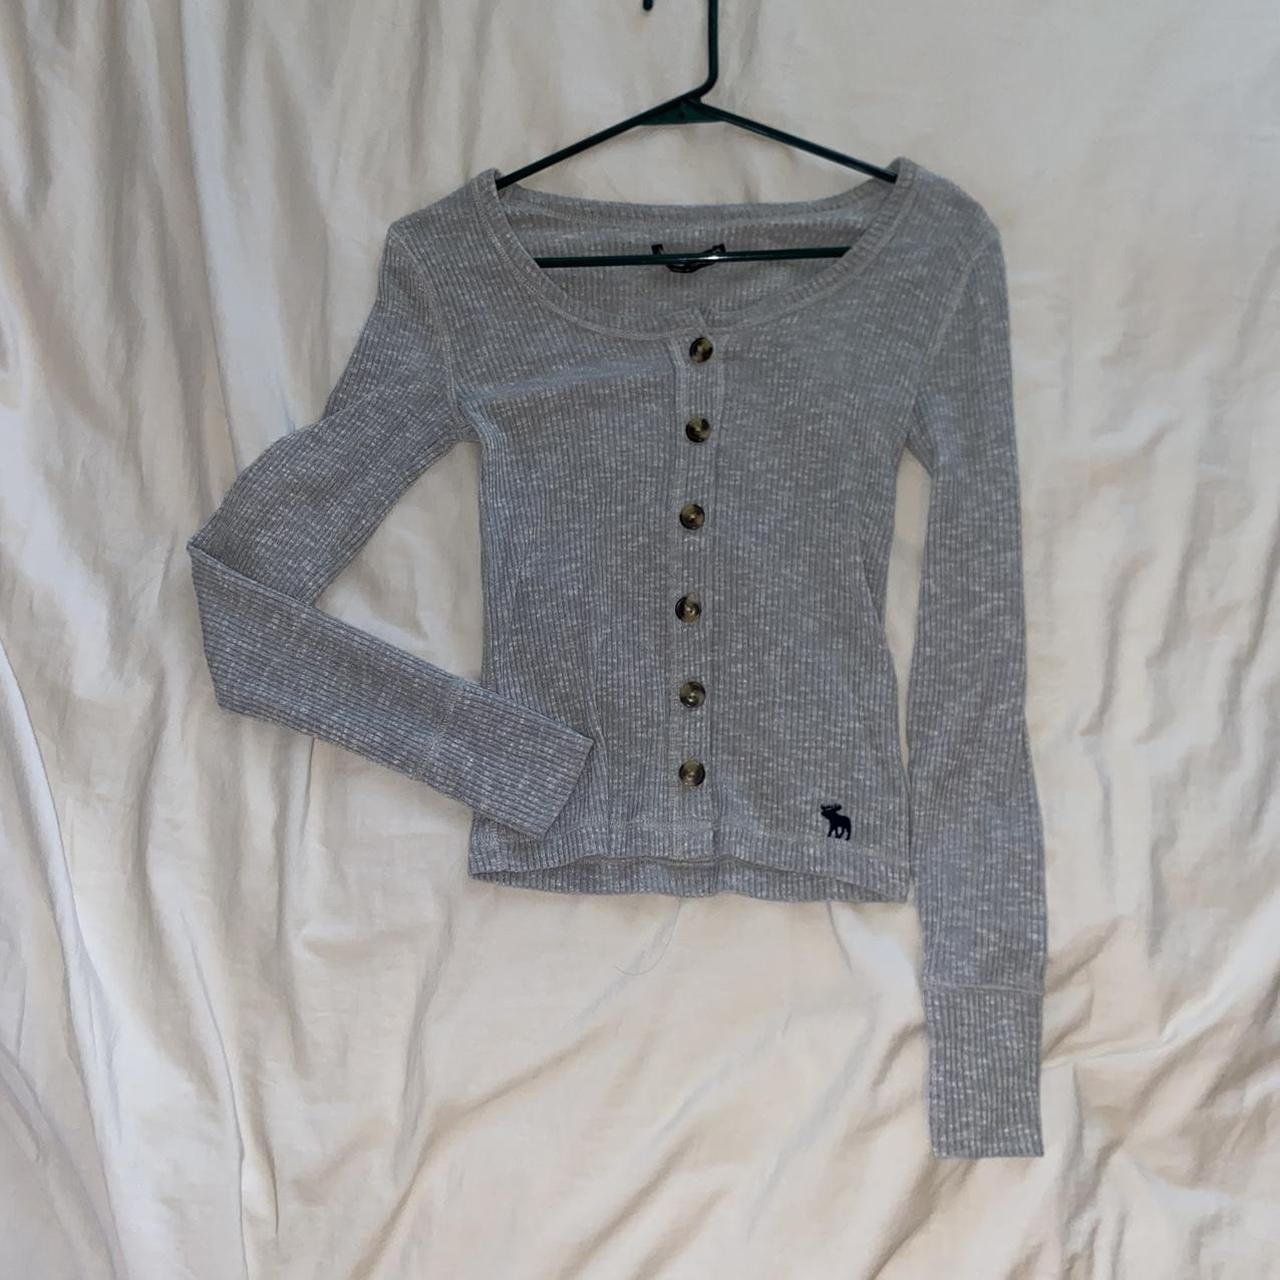 Abercrombie & Fitch Women's Grey Shirt